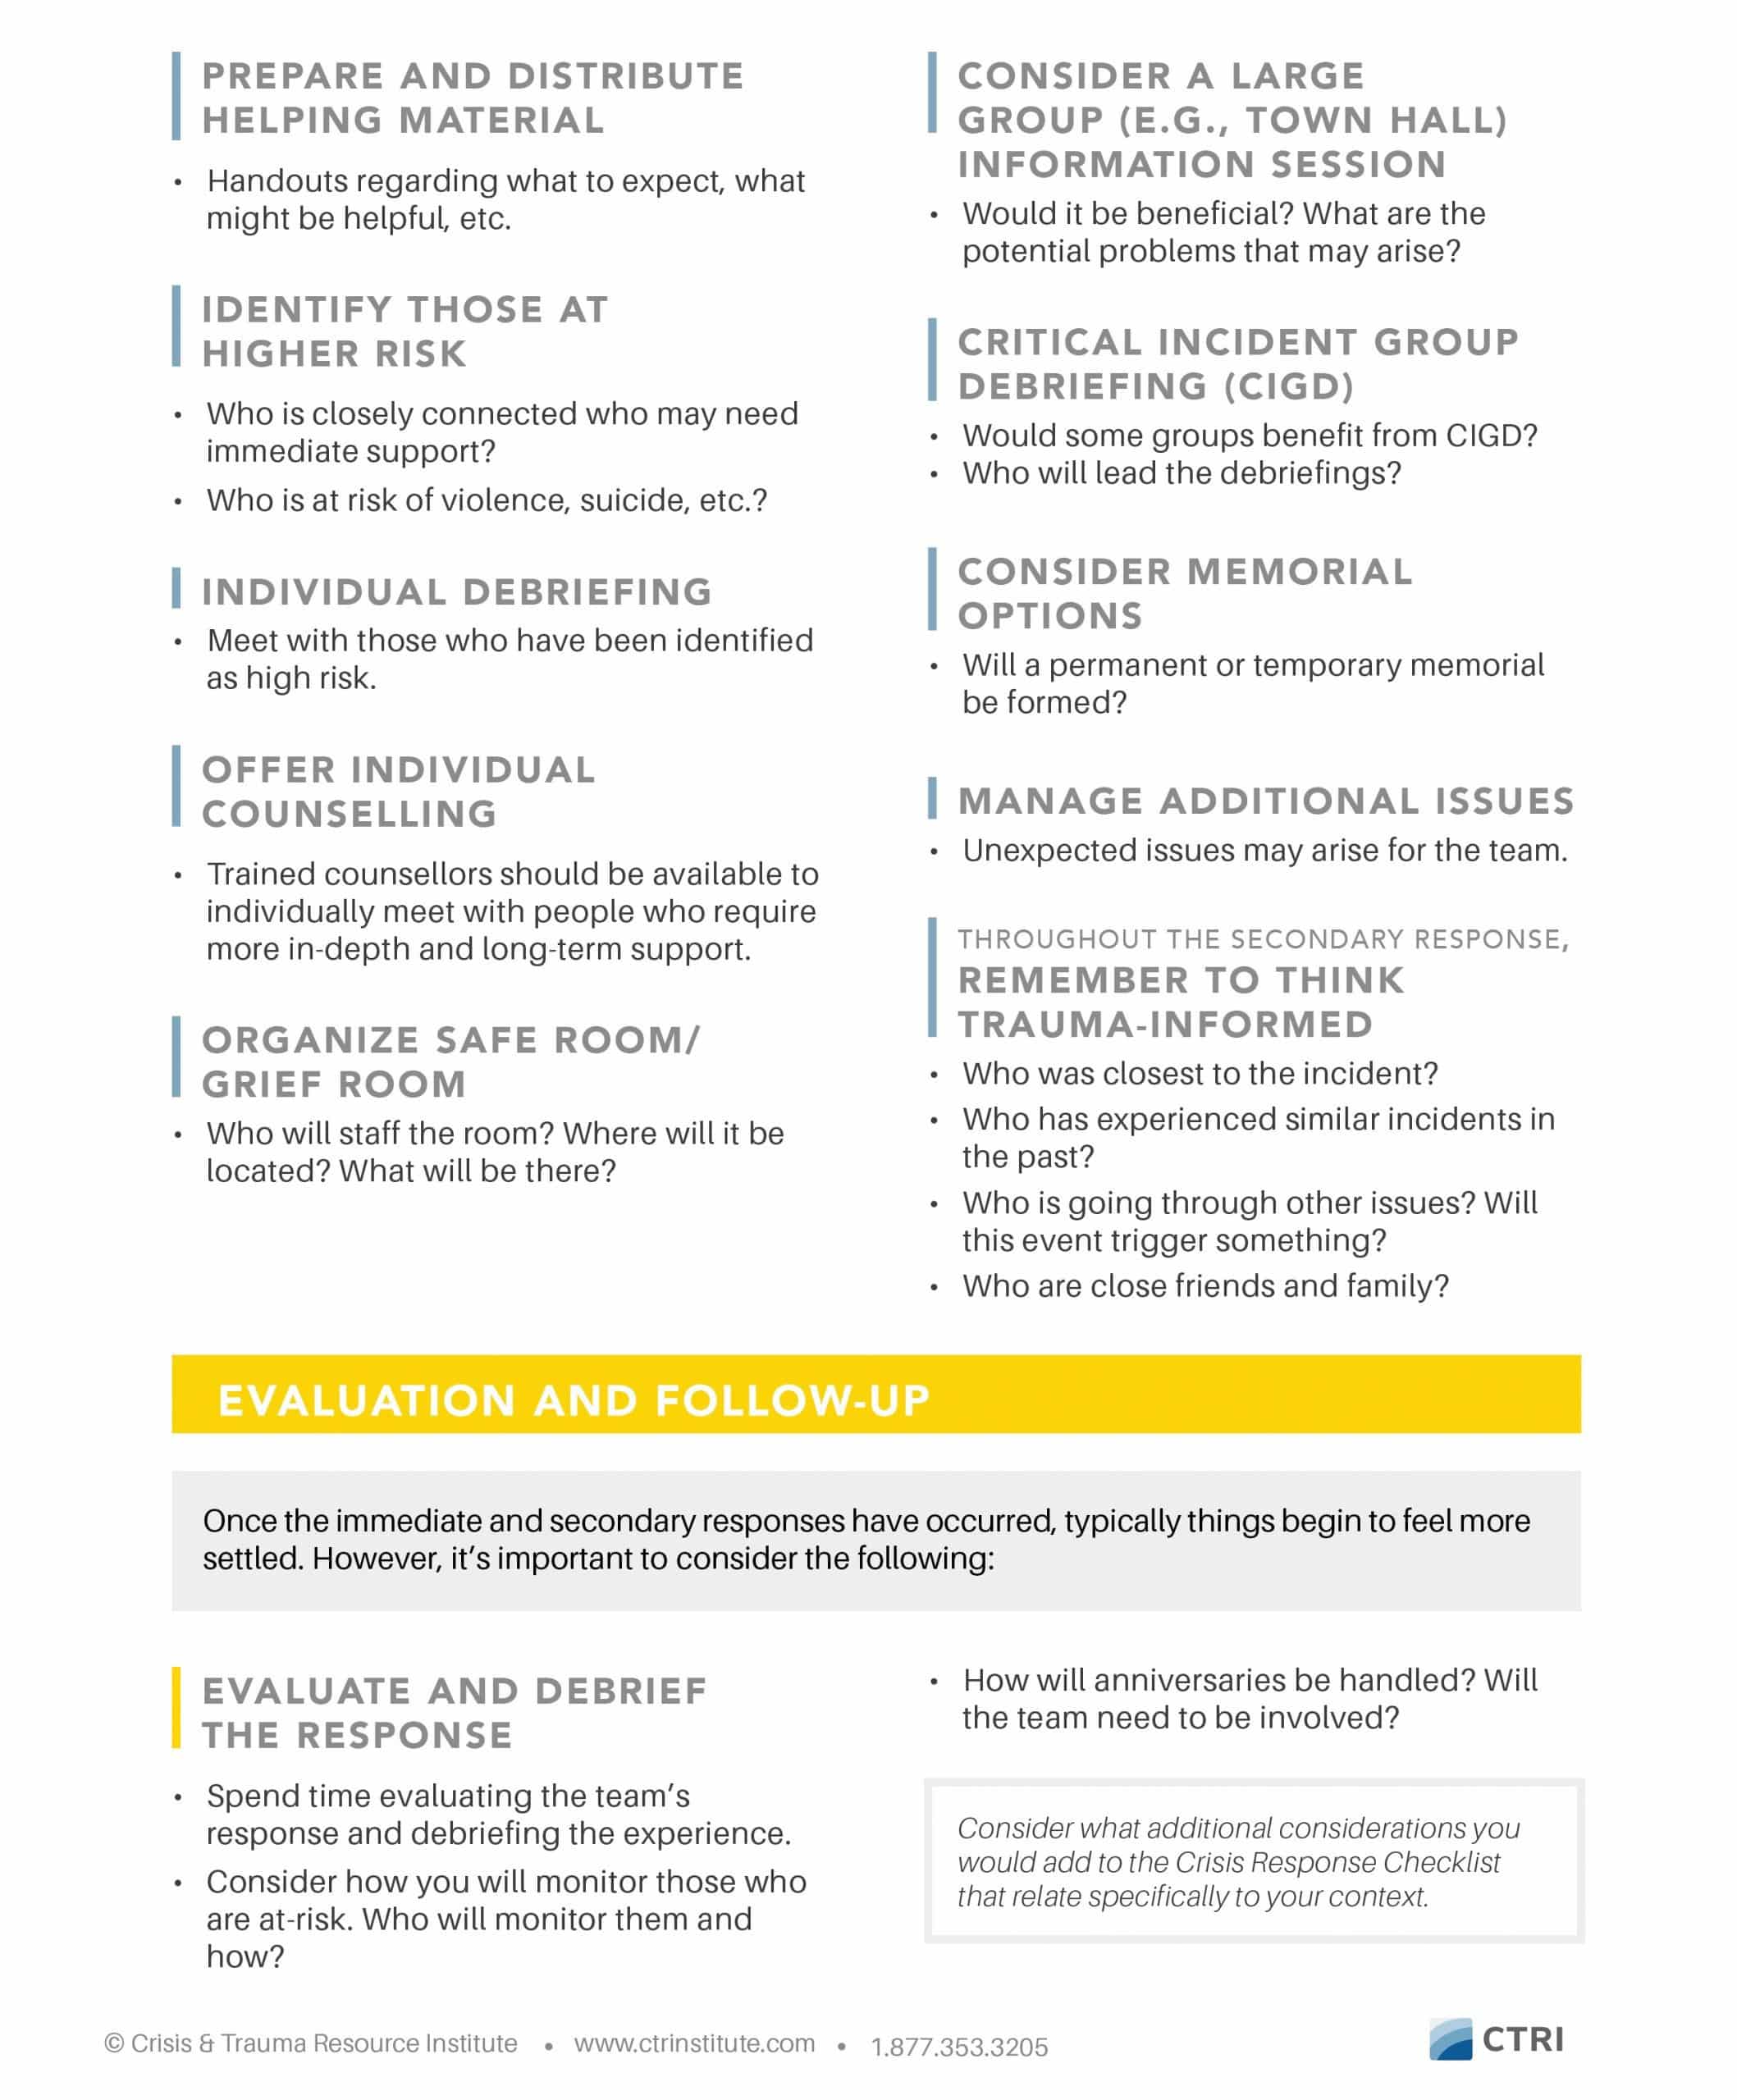 Crisis Response Checklist Printable handout page 3 image